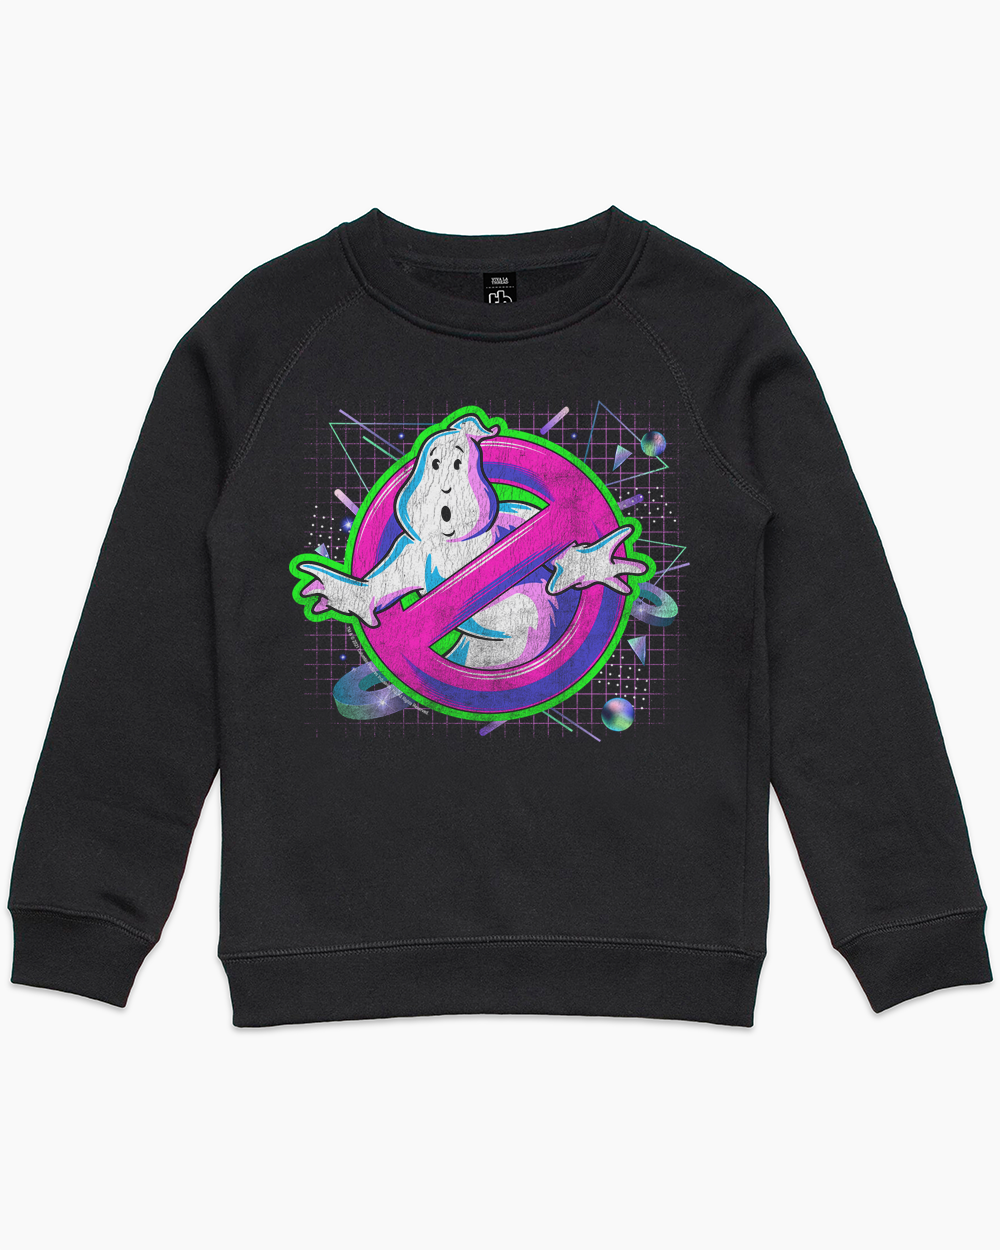 Ghostbusters Synth Pop Kids Sweater Australia Online